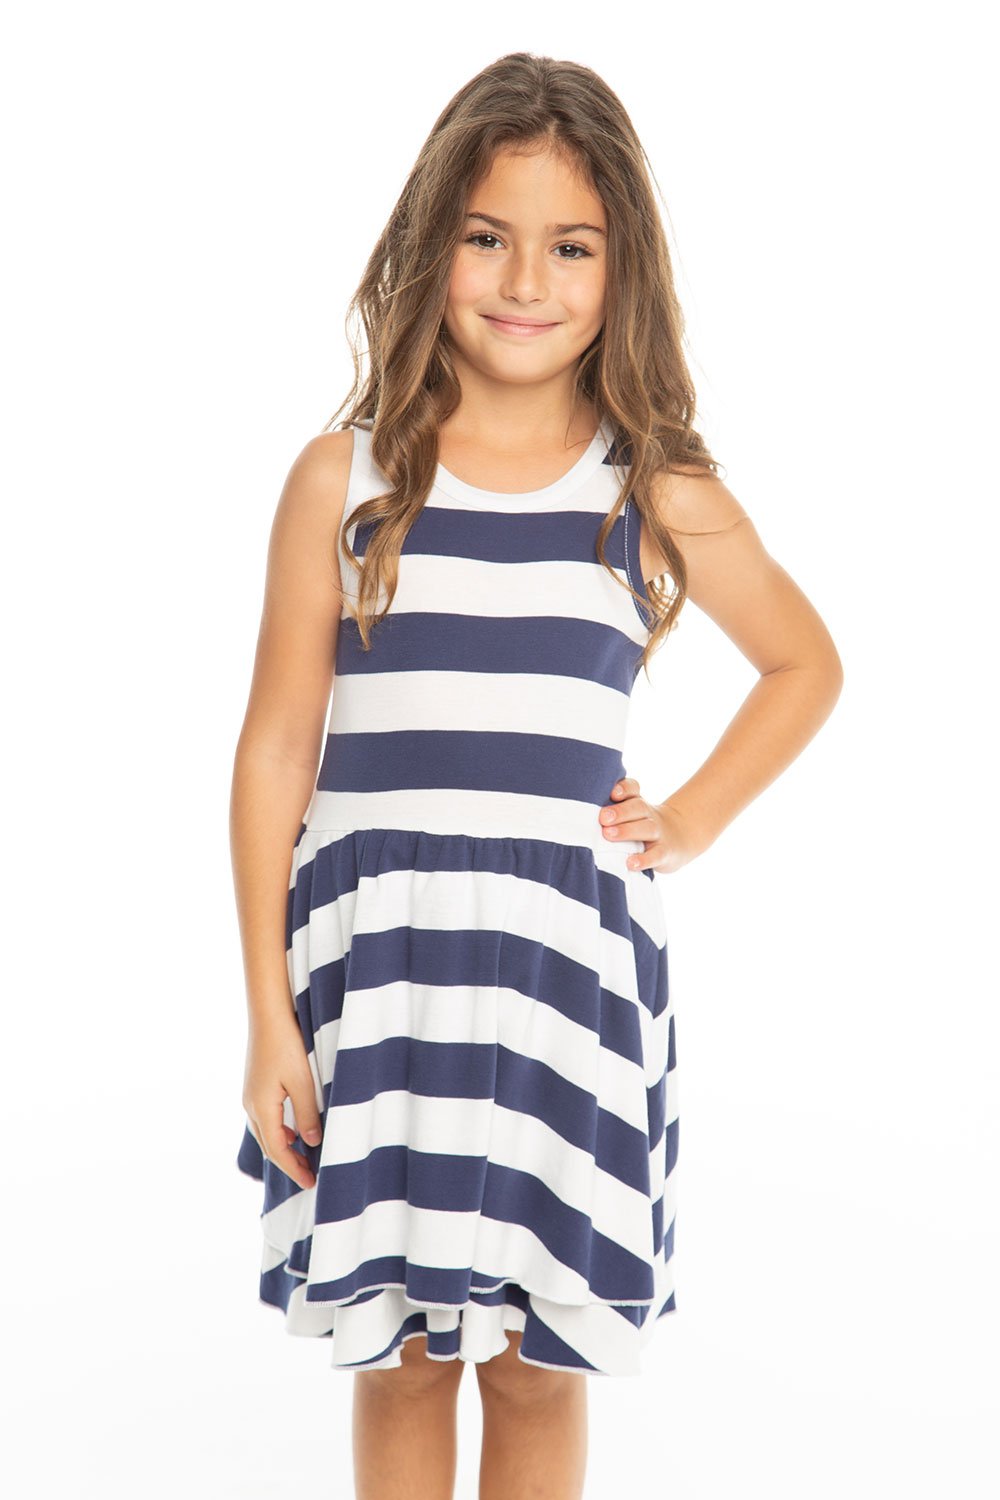 Chaser Kids - Girls Baby Rib Tiered Tank Dress in Stripe